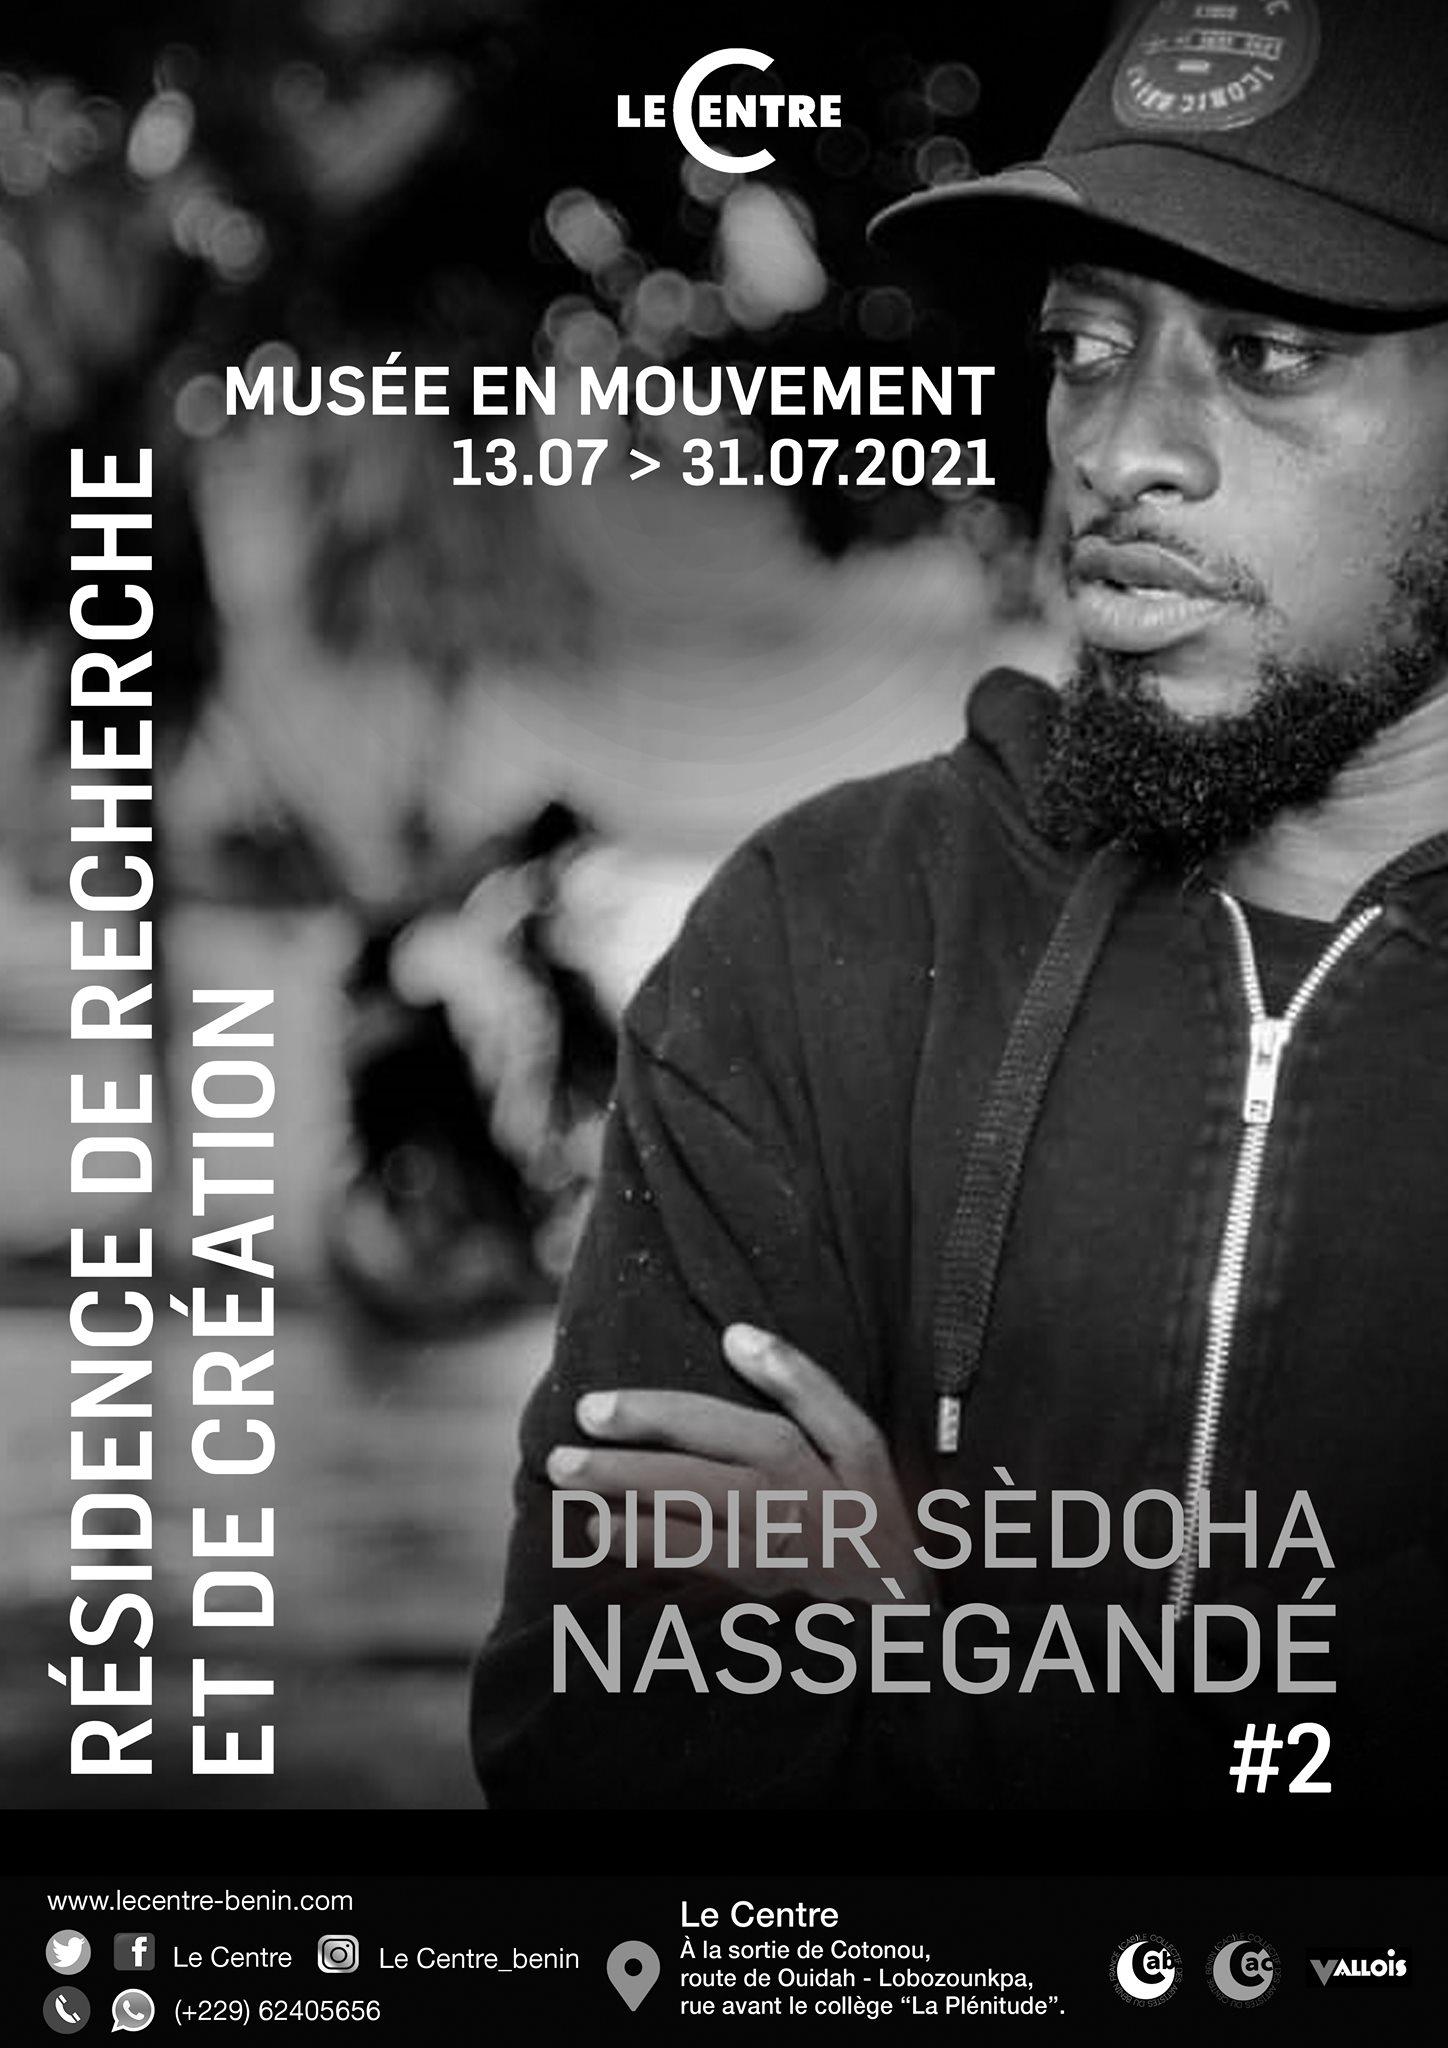 Didier Sèdoha Nassègandé